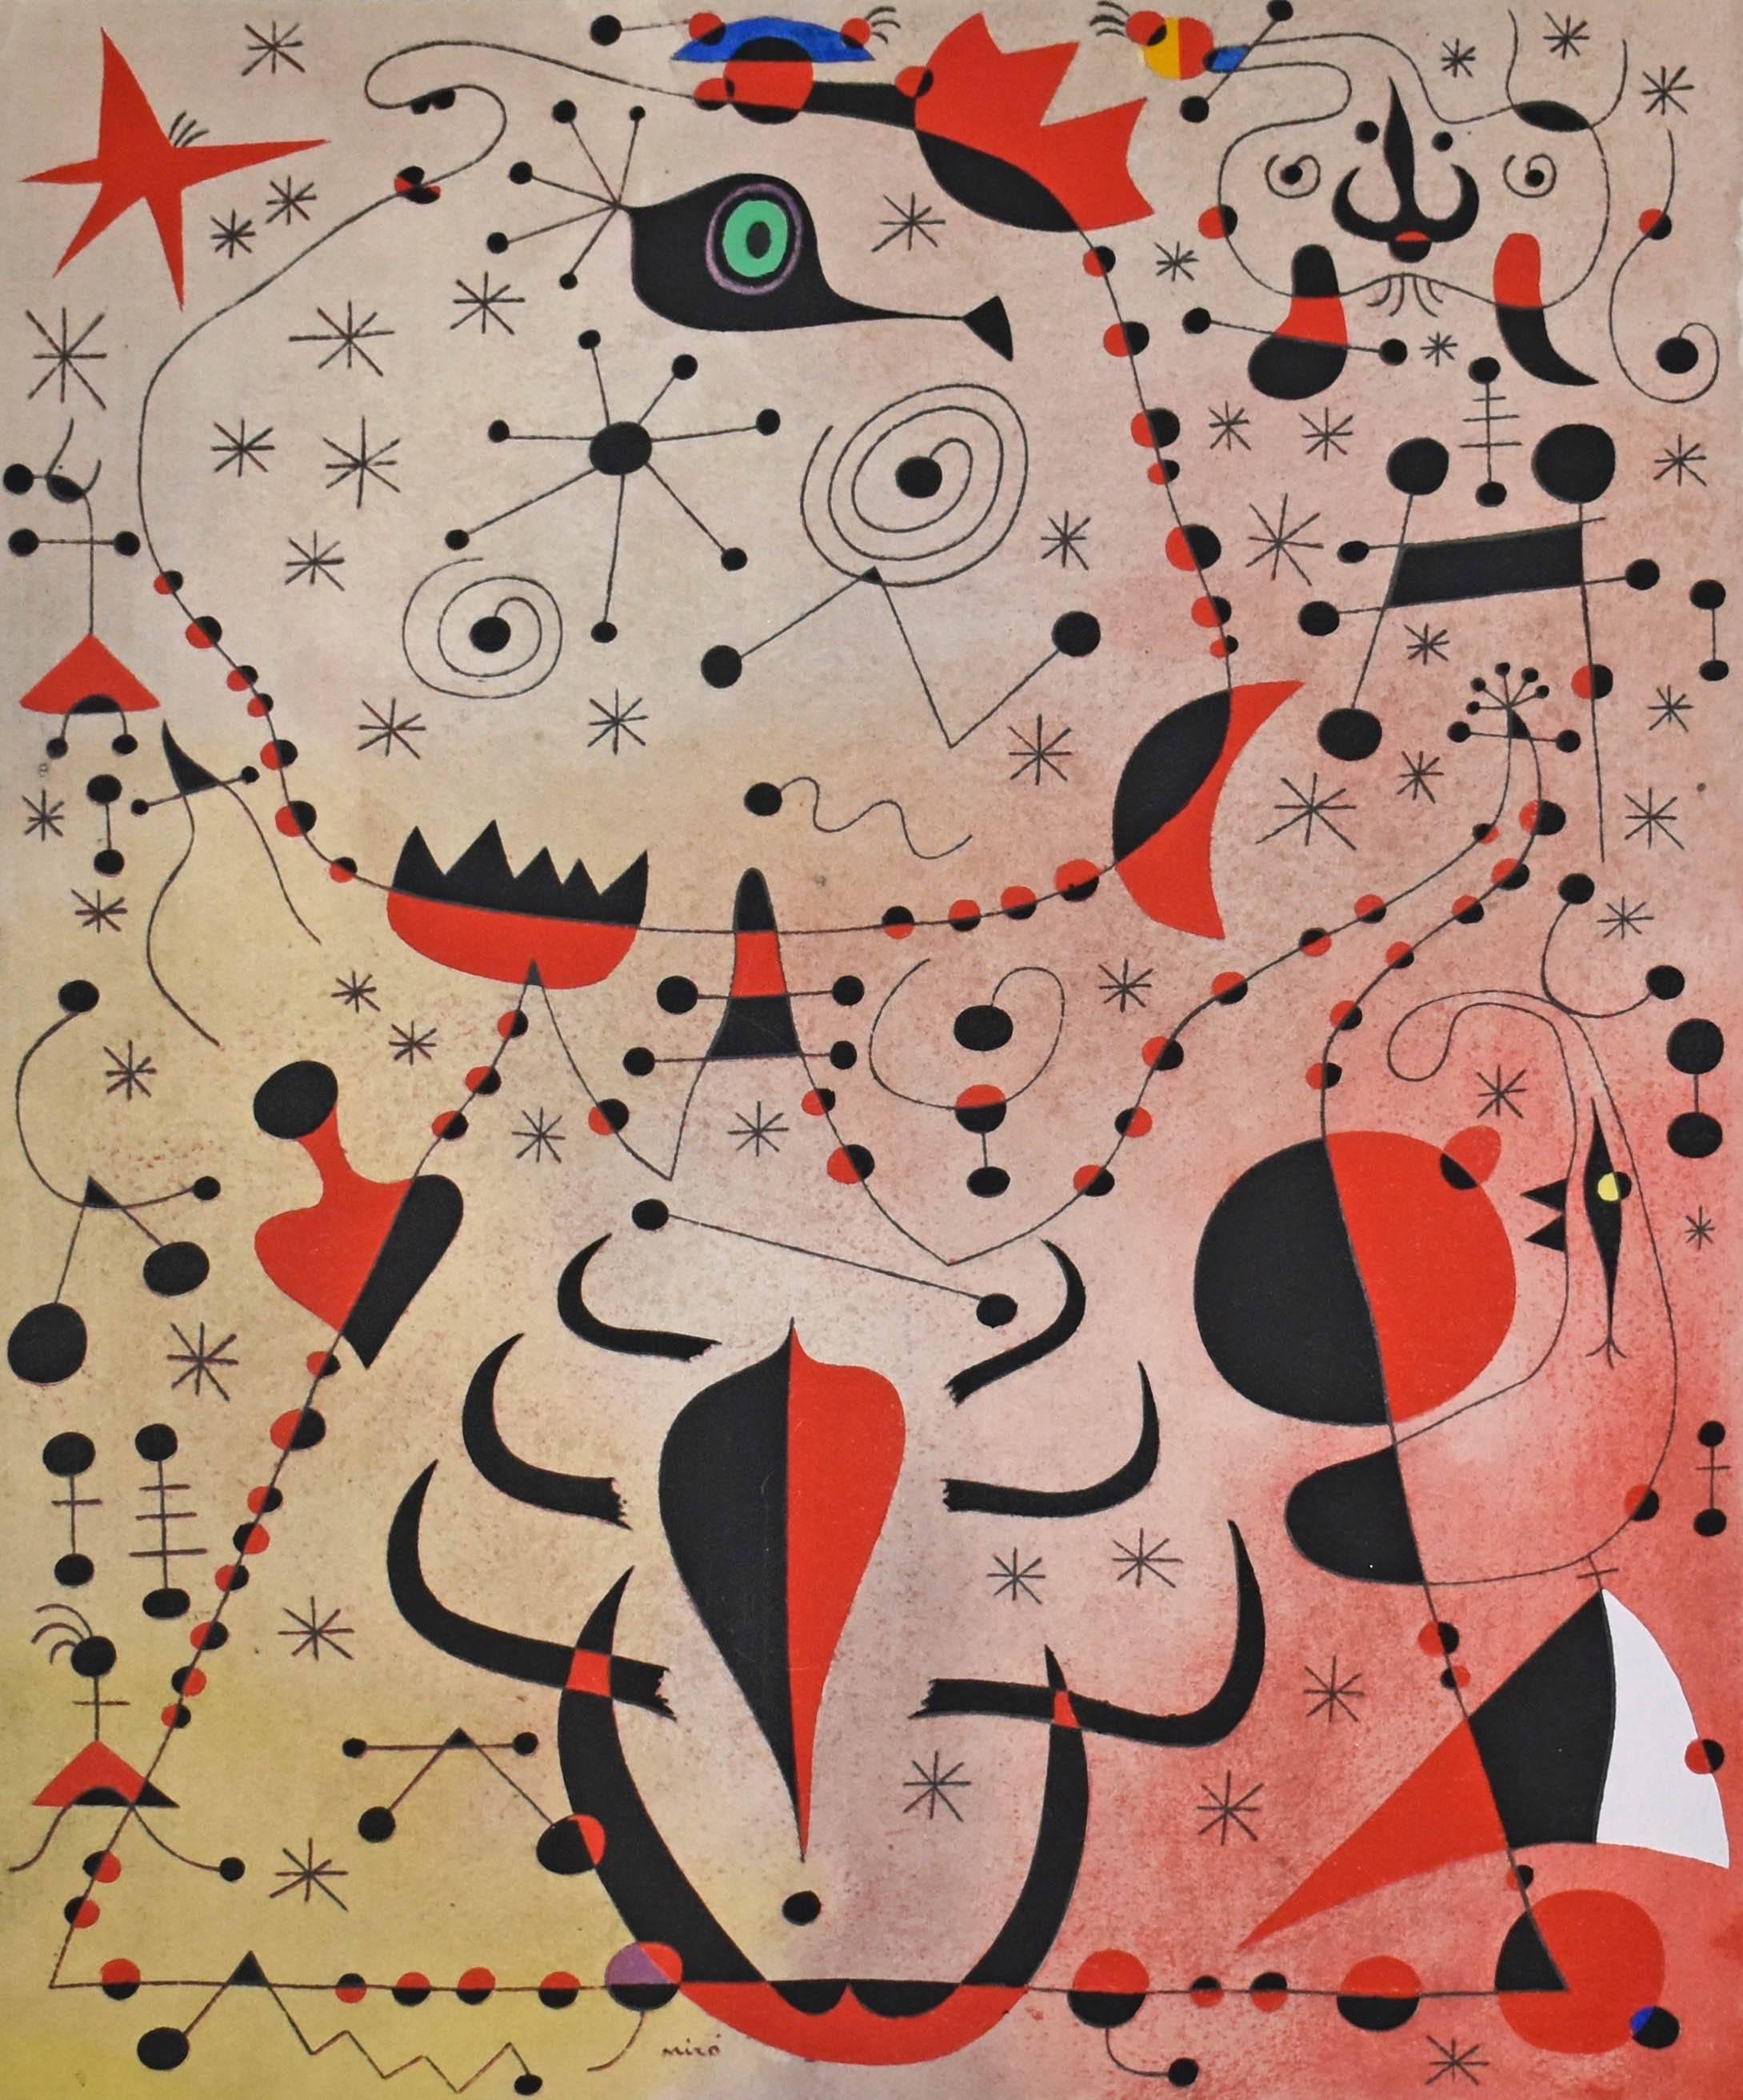 (after) Joan Miró Abstract Print - Le crepuscule rose caresse les femmes et les oiseaux, from Constellations